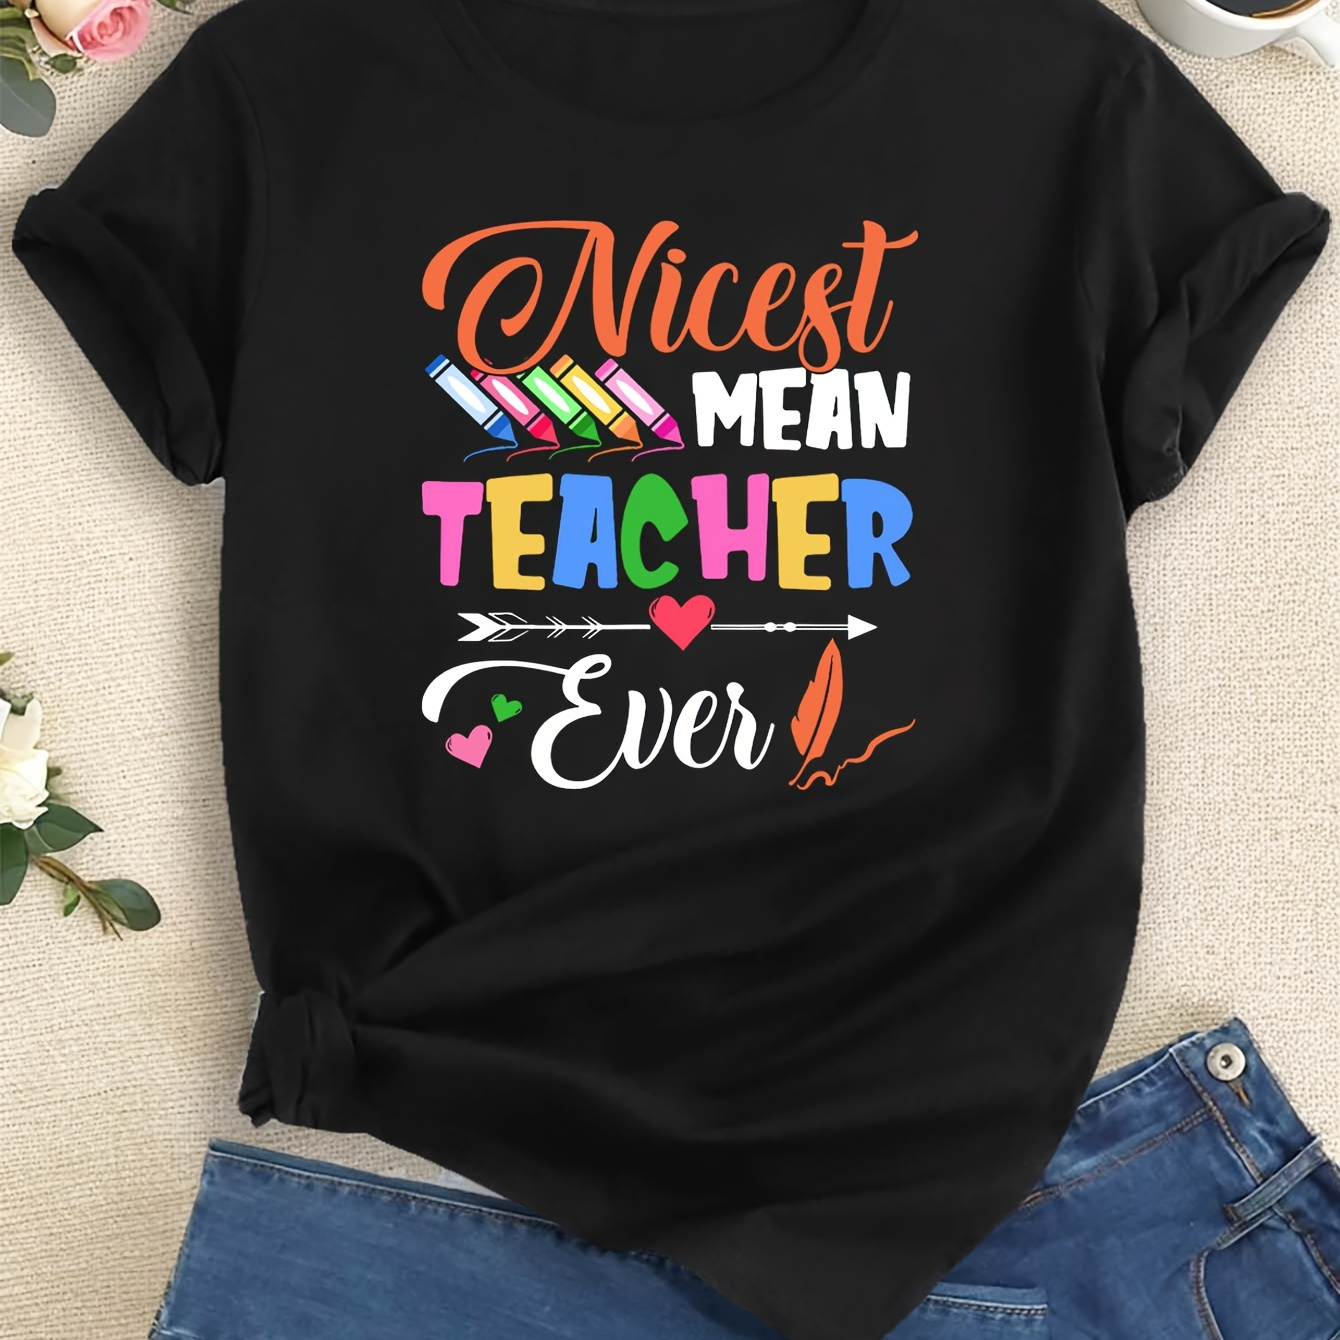 

Nicest Teacher Print T-shirt, Short Sleeve Crew Neck Casual Top For Summer & Spring, Women's Clothing